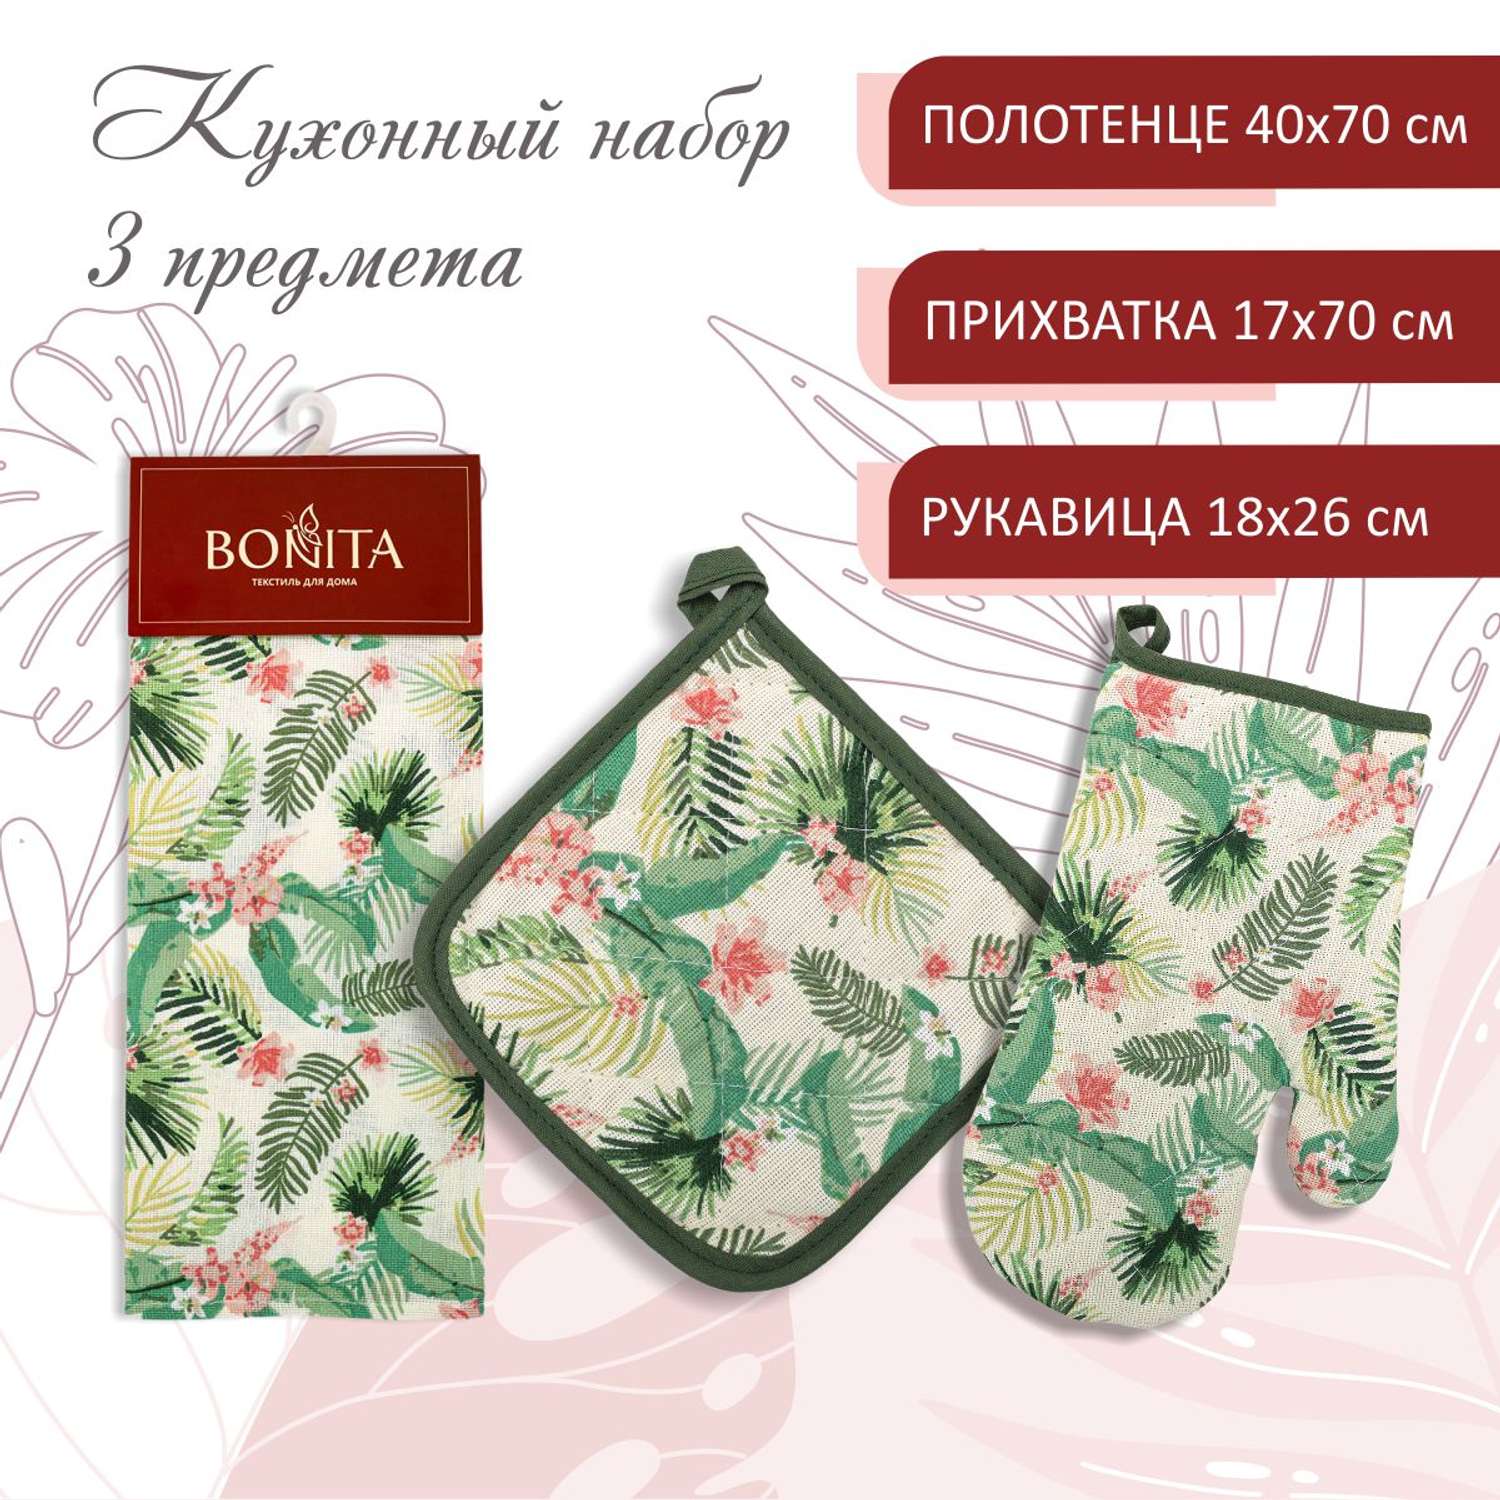 Набор кухонный BONITA полотенце+рукавица+прихватка Папоротник - фото 1